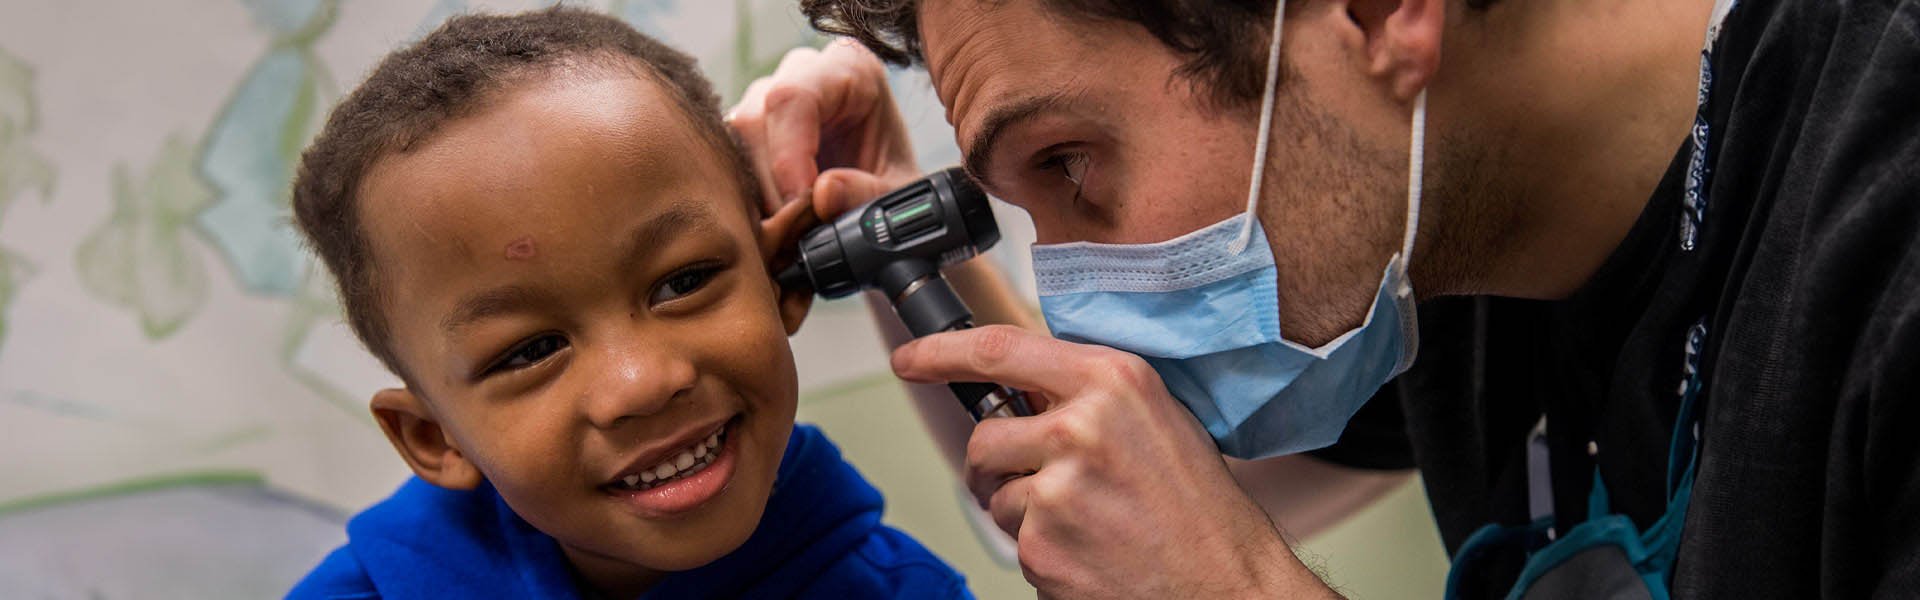 Image of doctor examining child